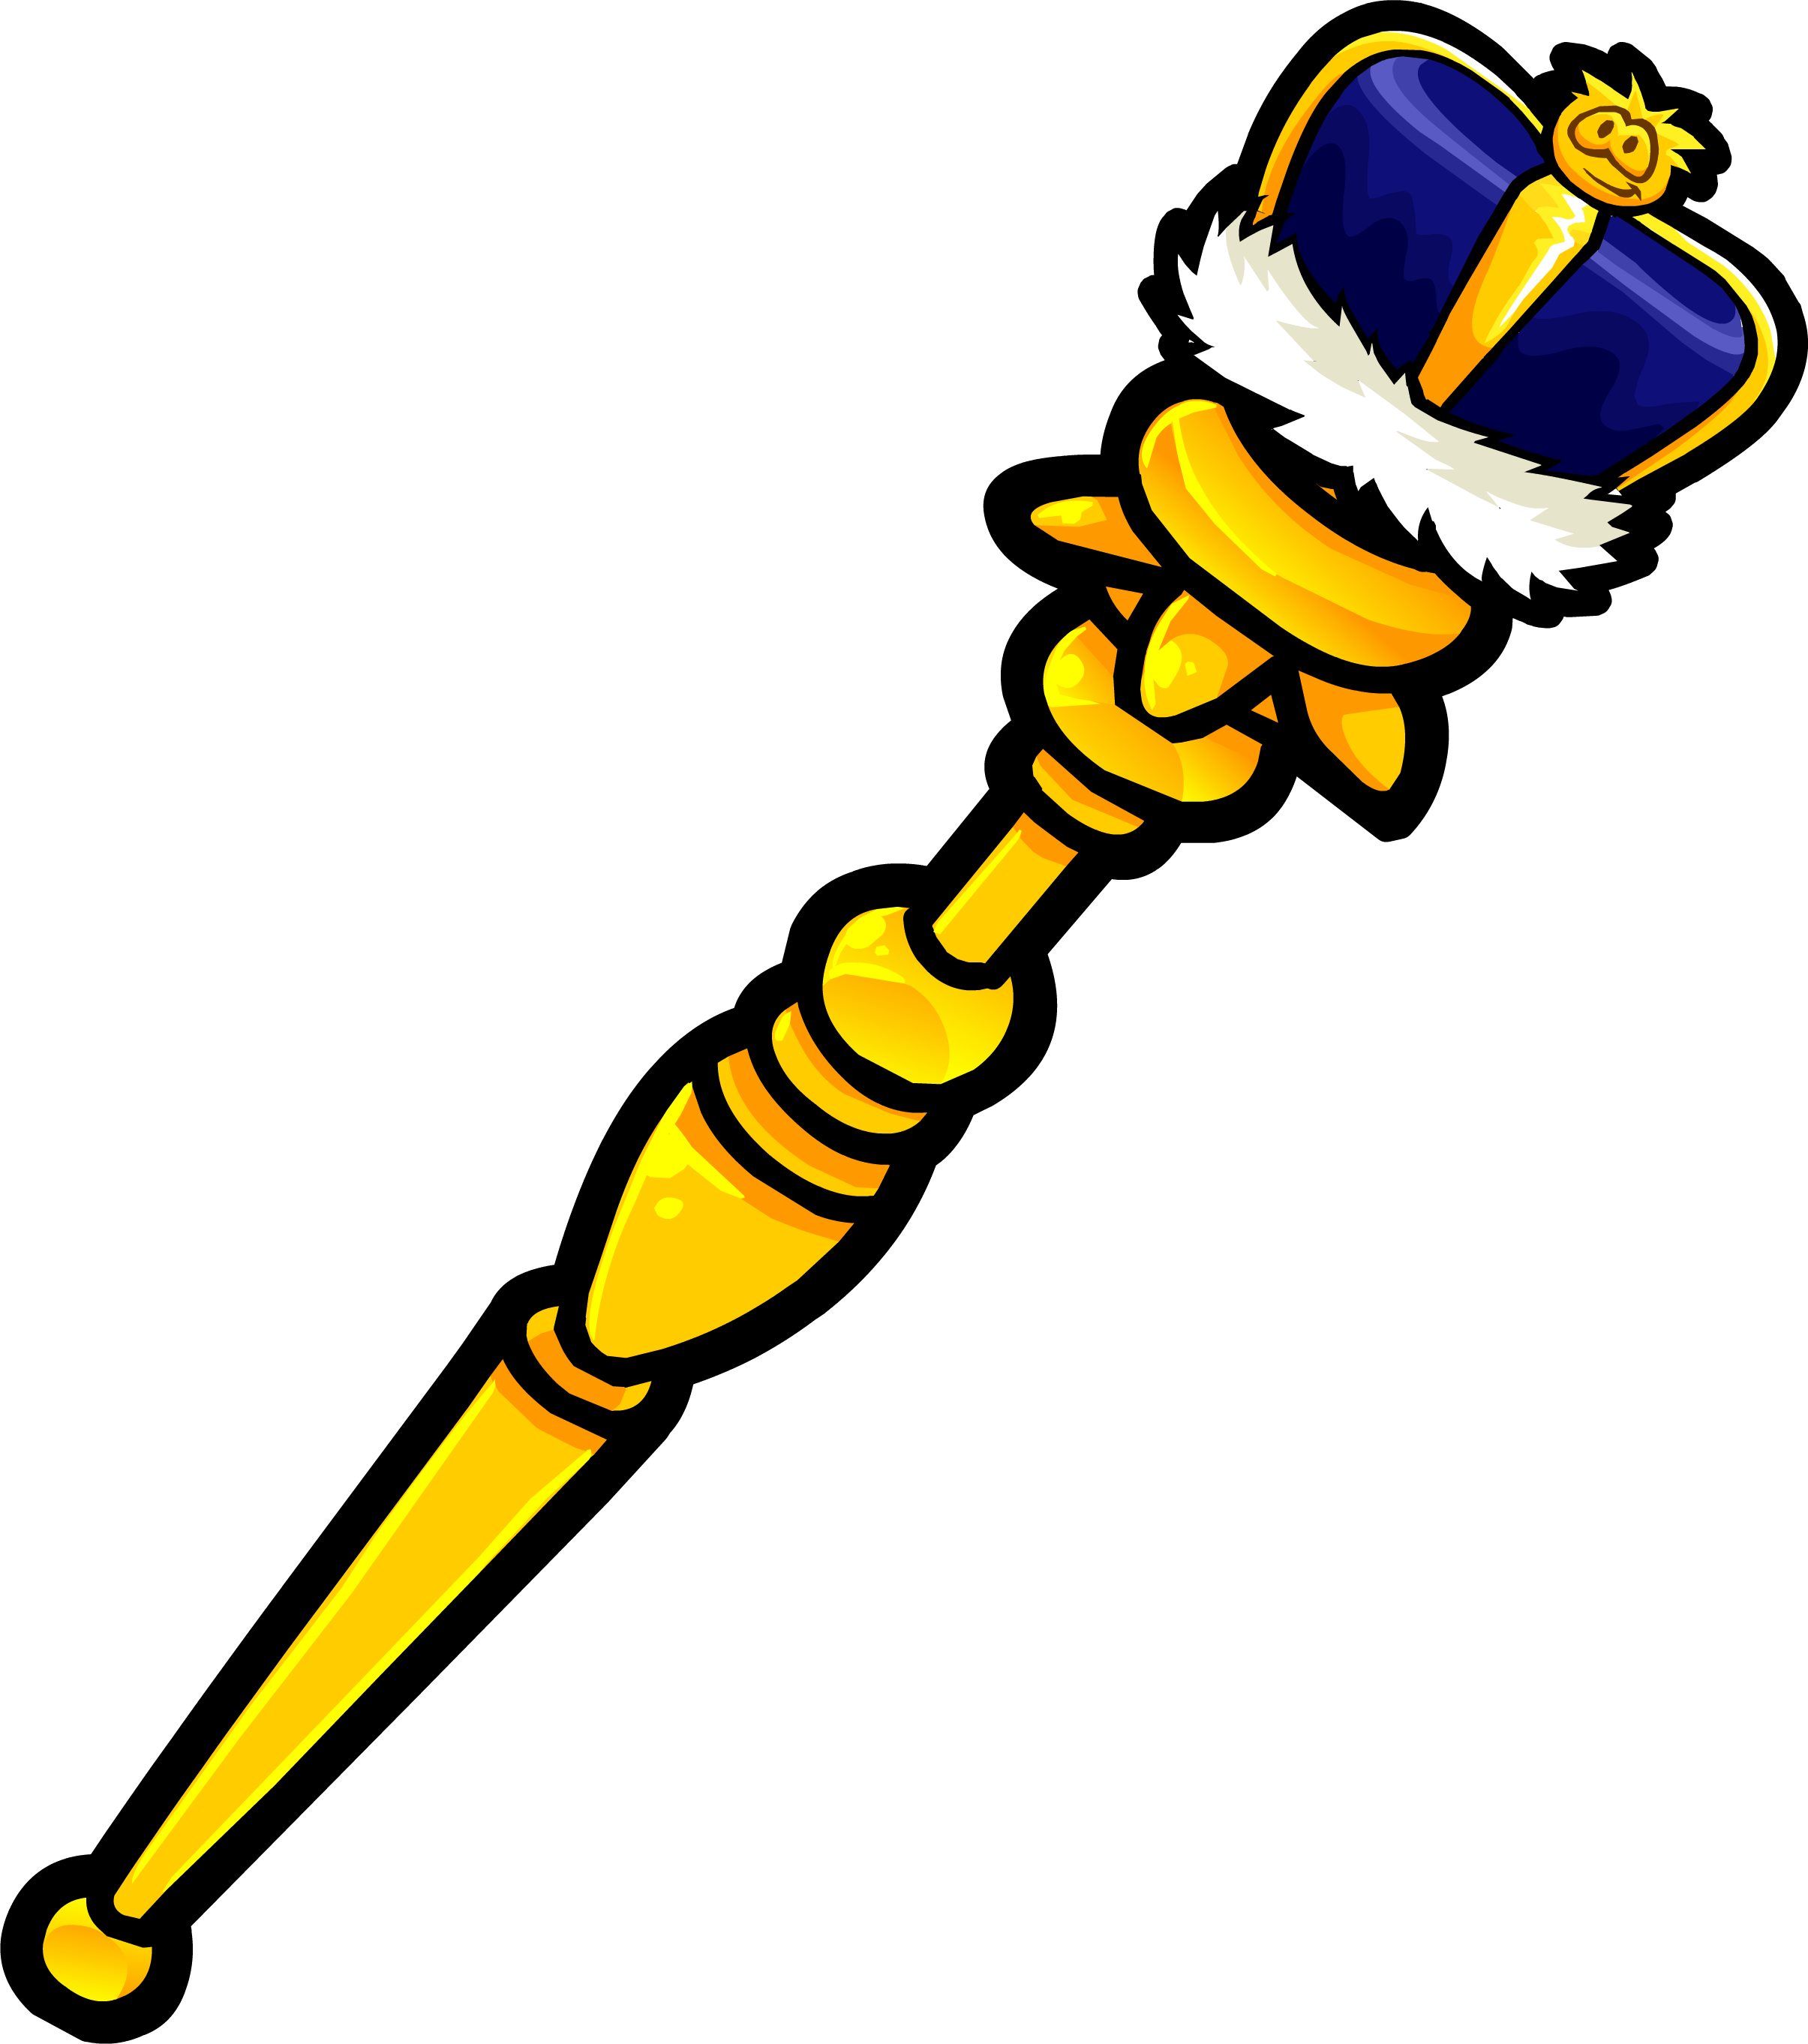 Staff scepter clipart